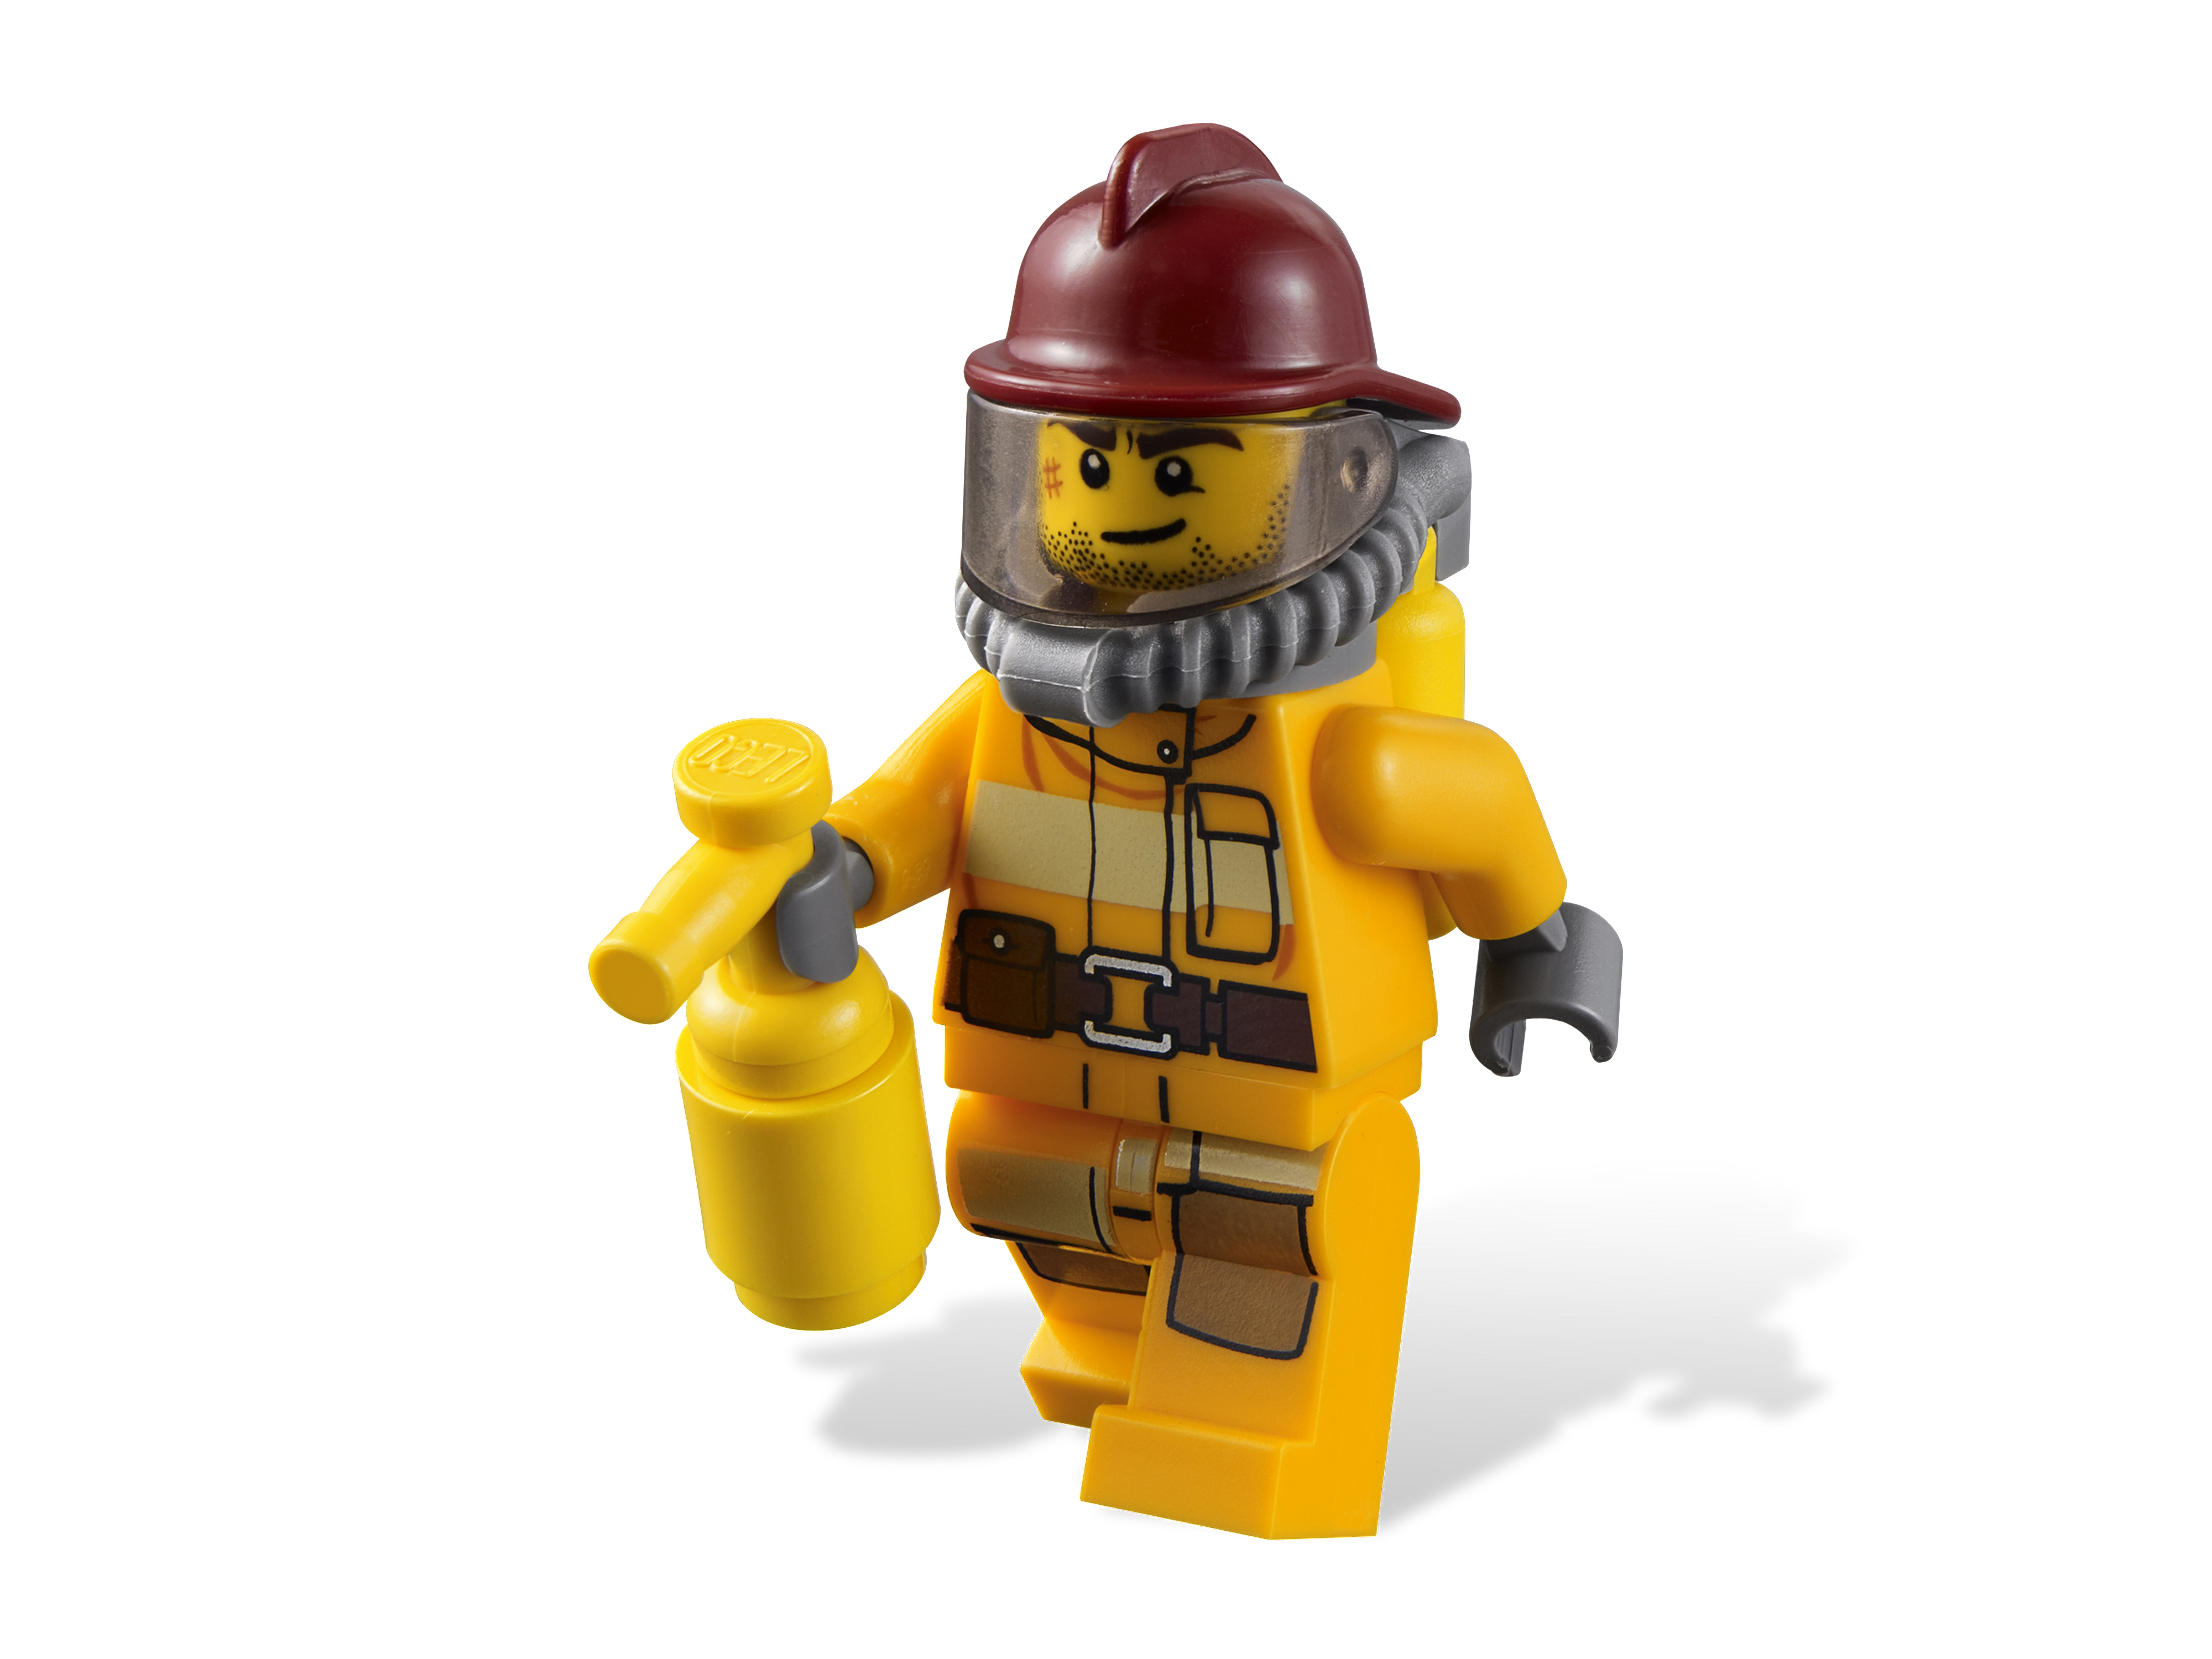 Lego clipart lego city. Minifigure firefighter all terrain